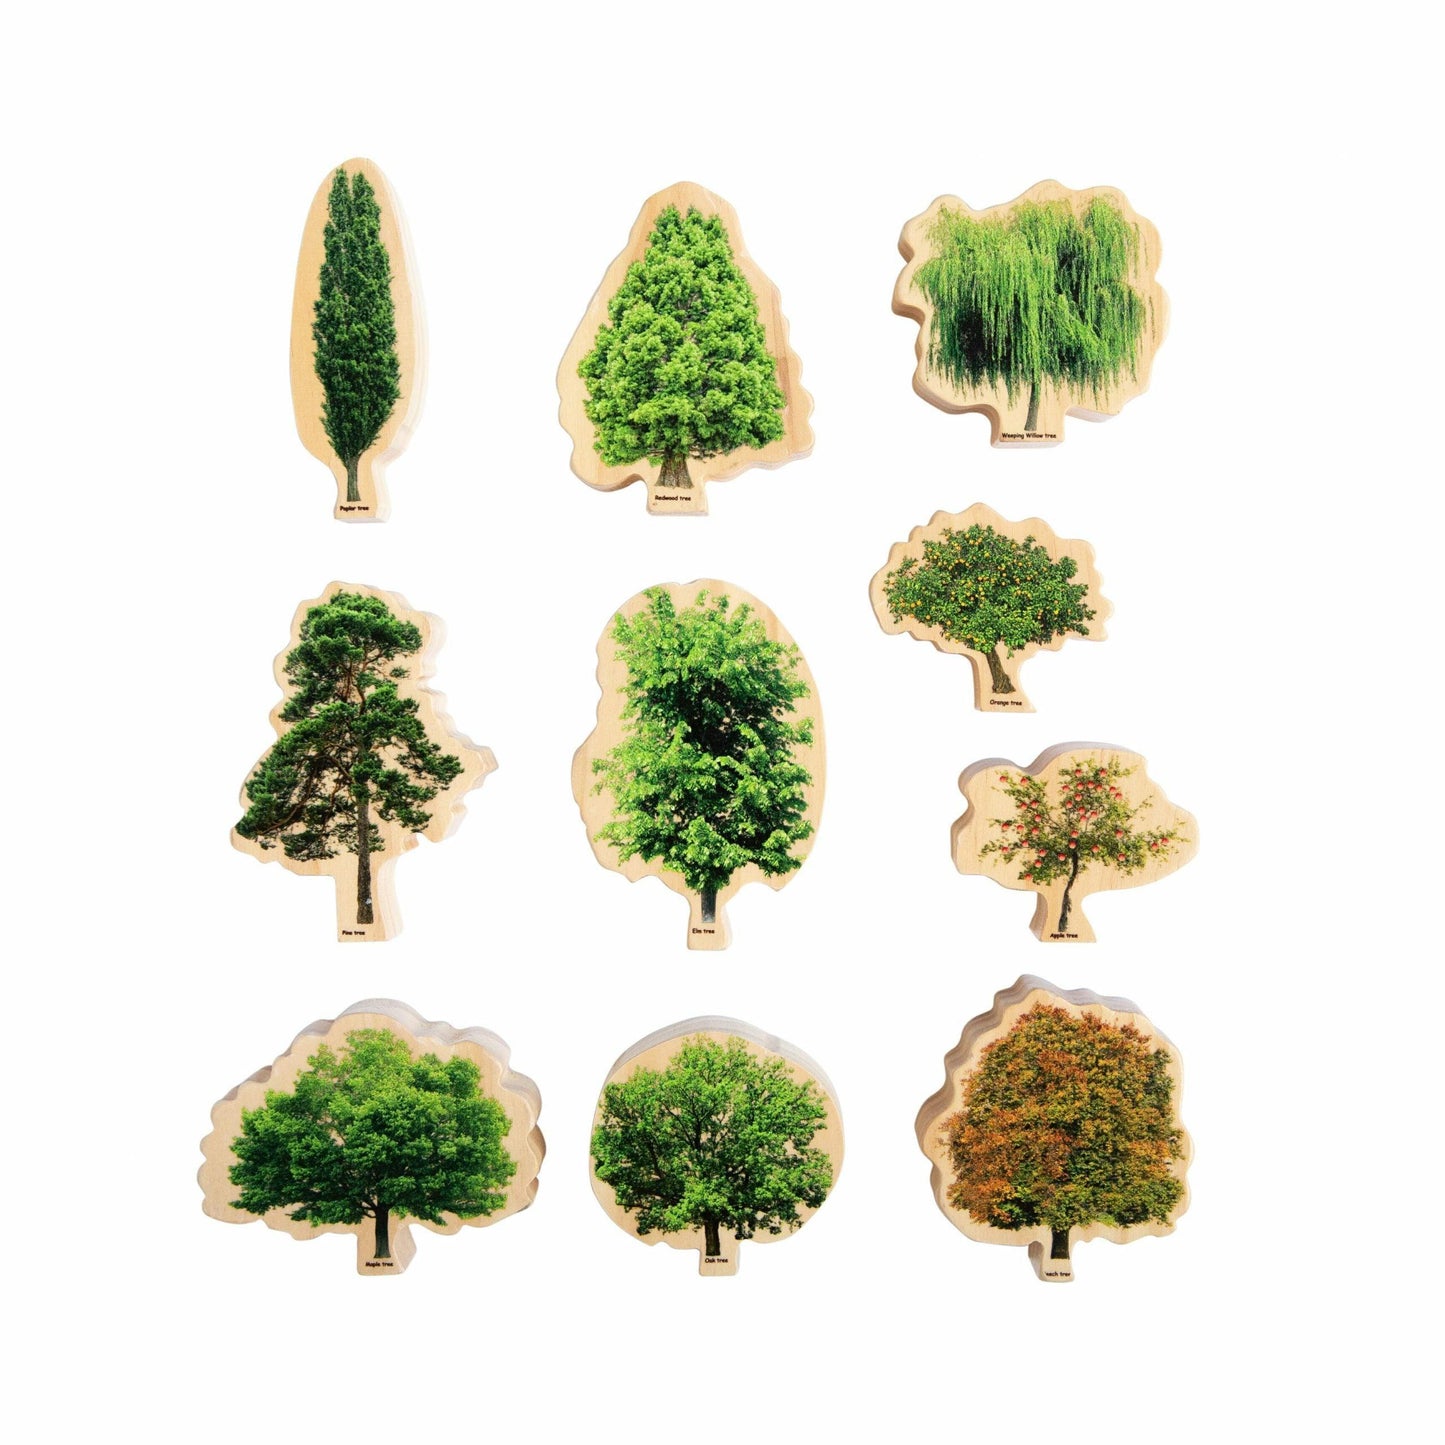 Interactive Seasonal Tree Playset